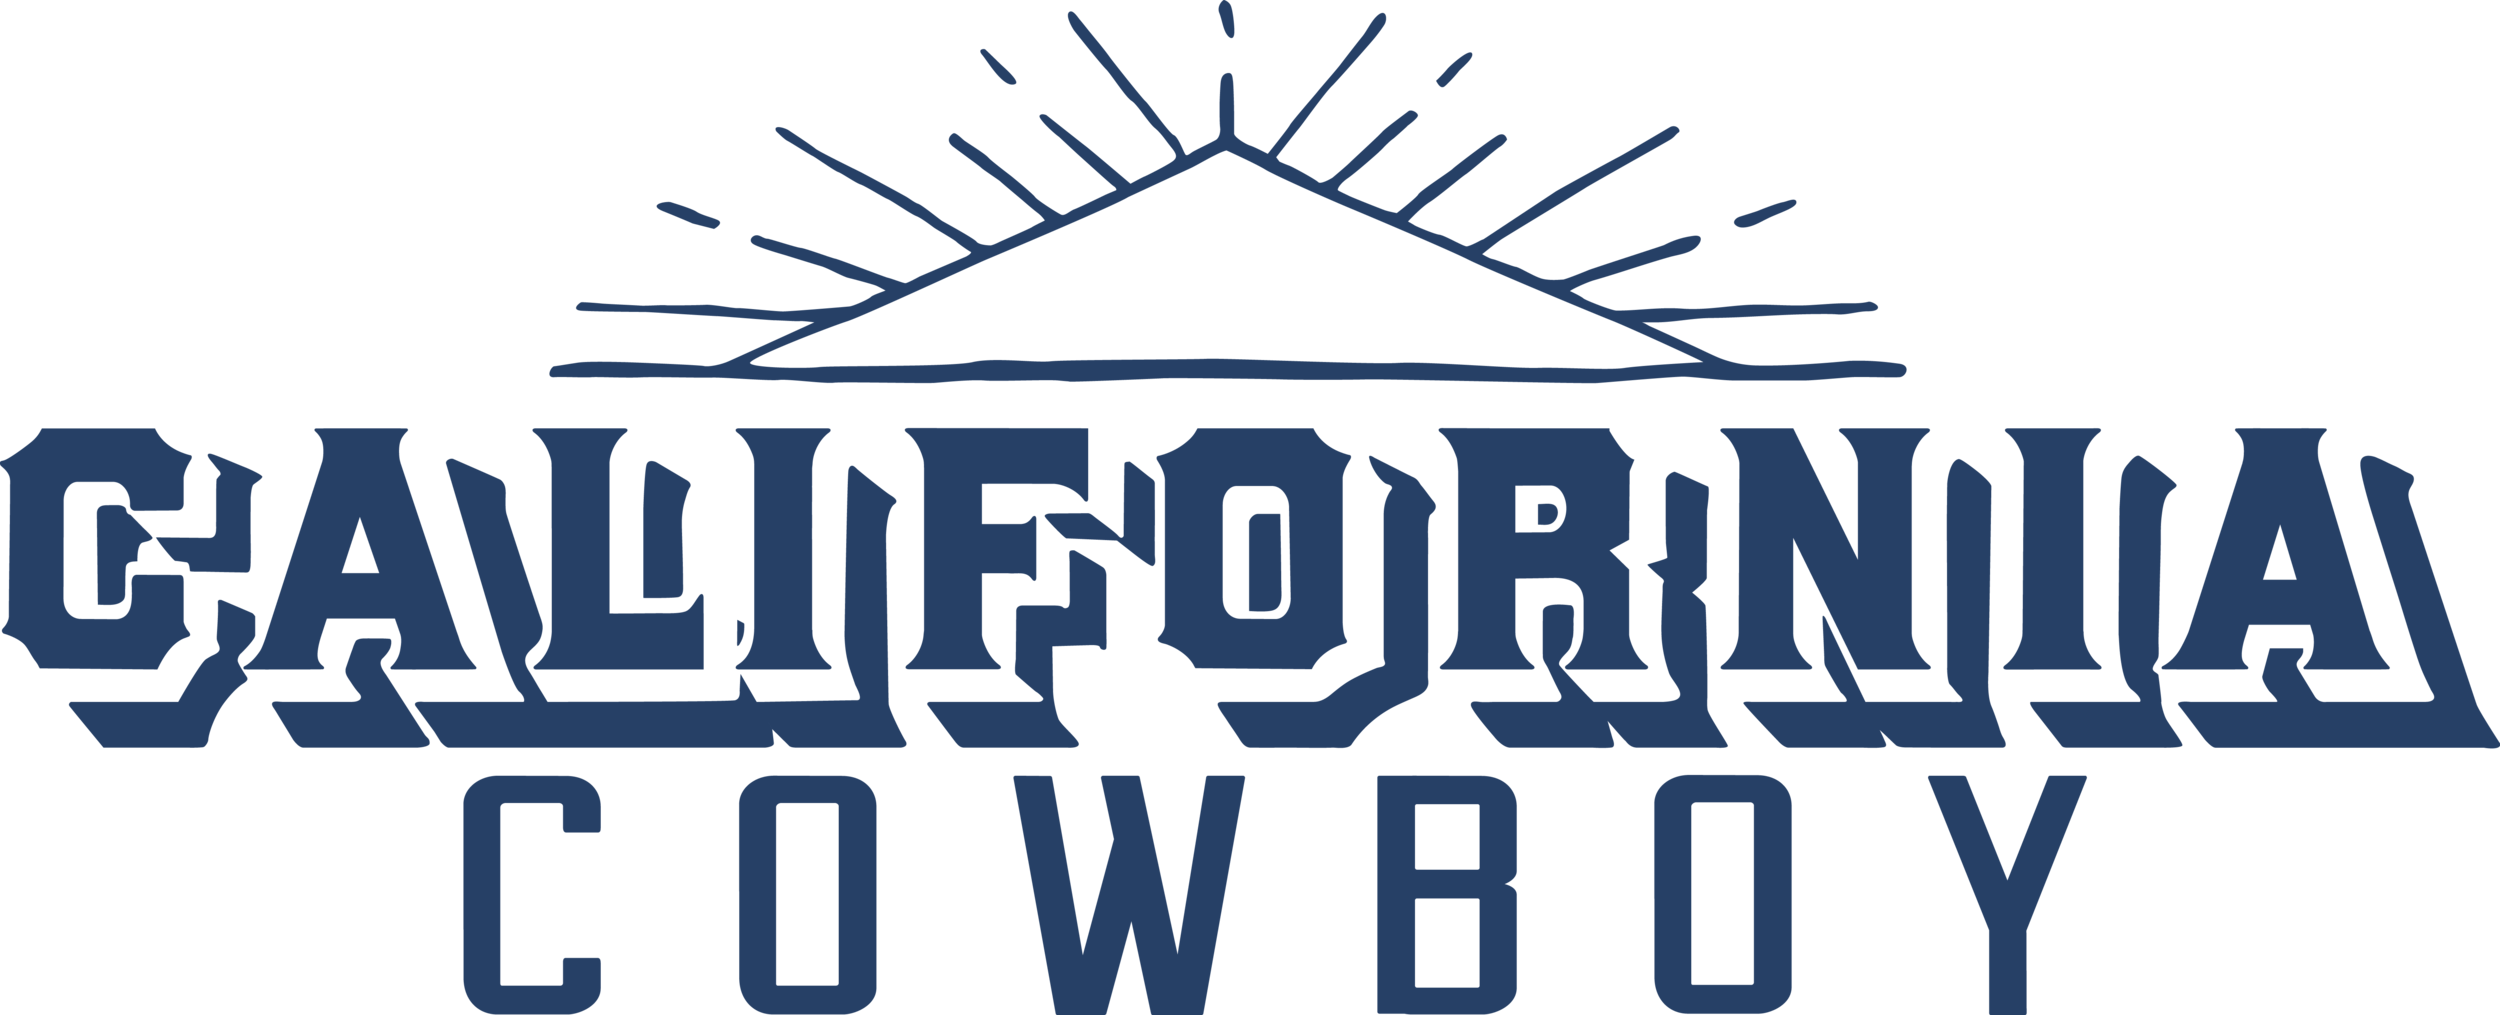 California Cowboy Logo Navy.png